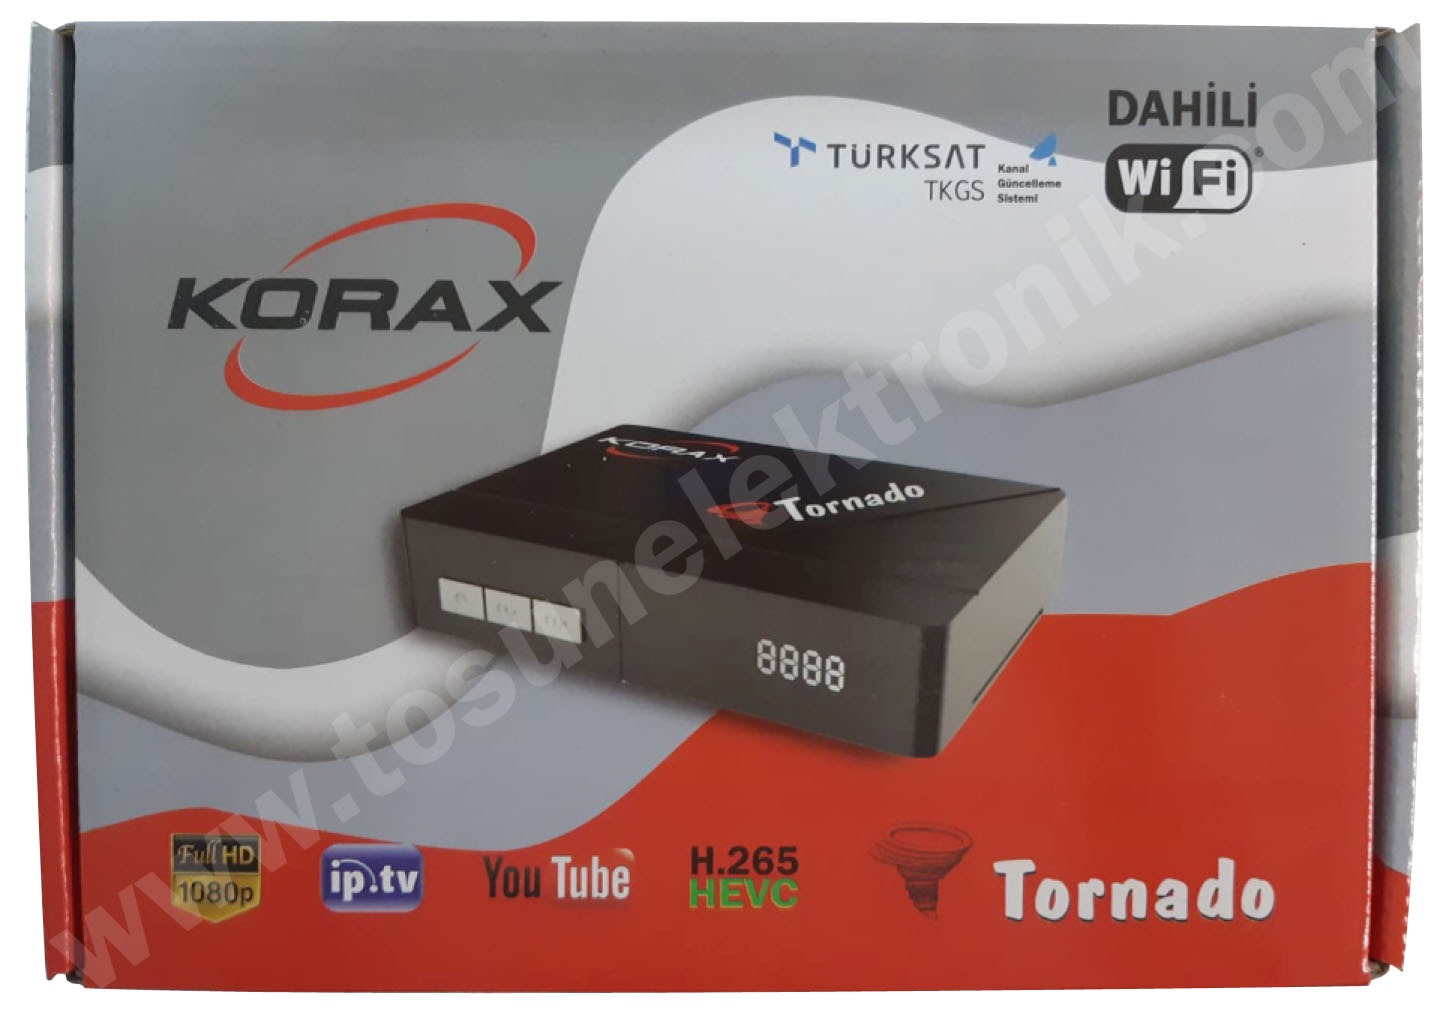 Korax Dahili Wi-Fi Tronado Full Hdmı Uydu Alıcı(Akıllı Kumanda)